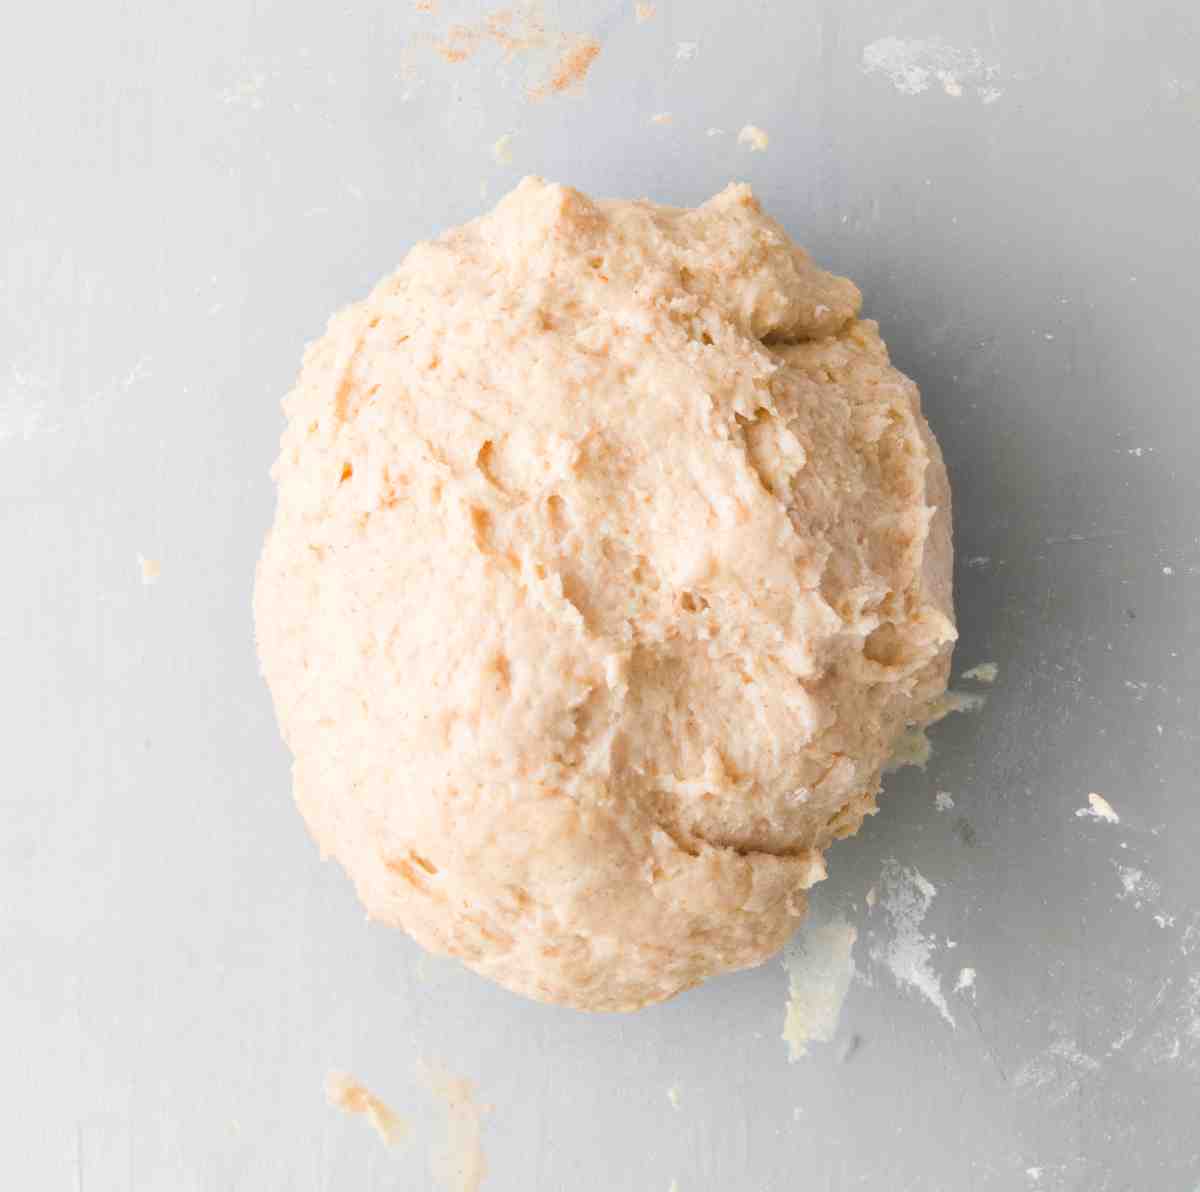 Pierogi dough shaped into a tight ball against a gray surface.